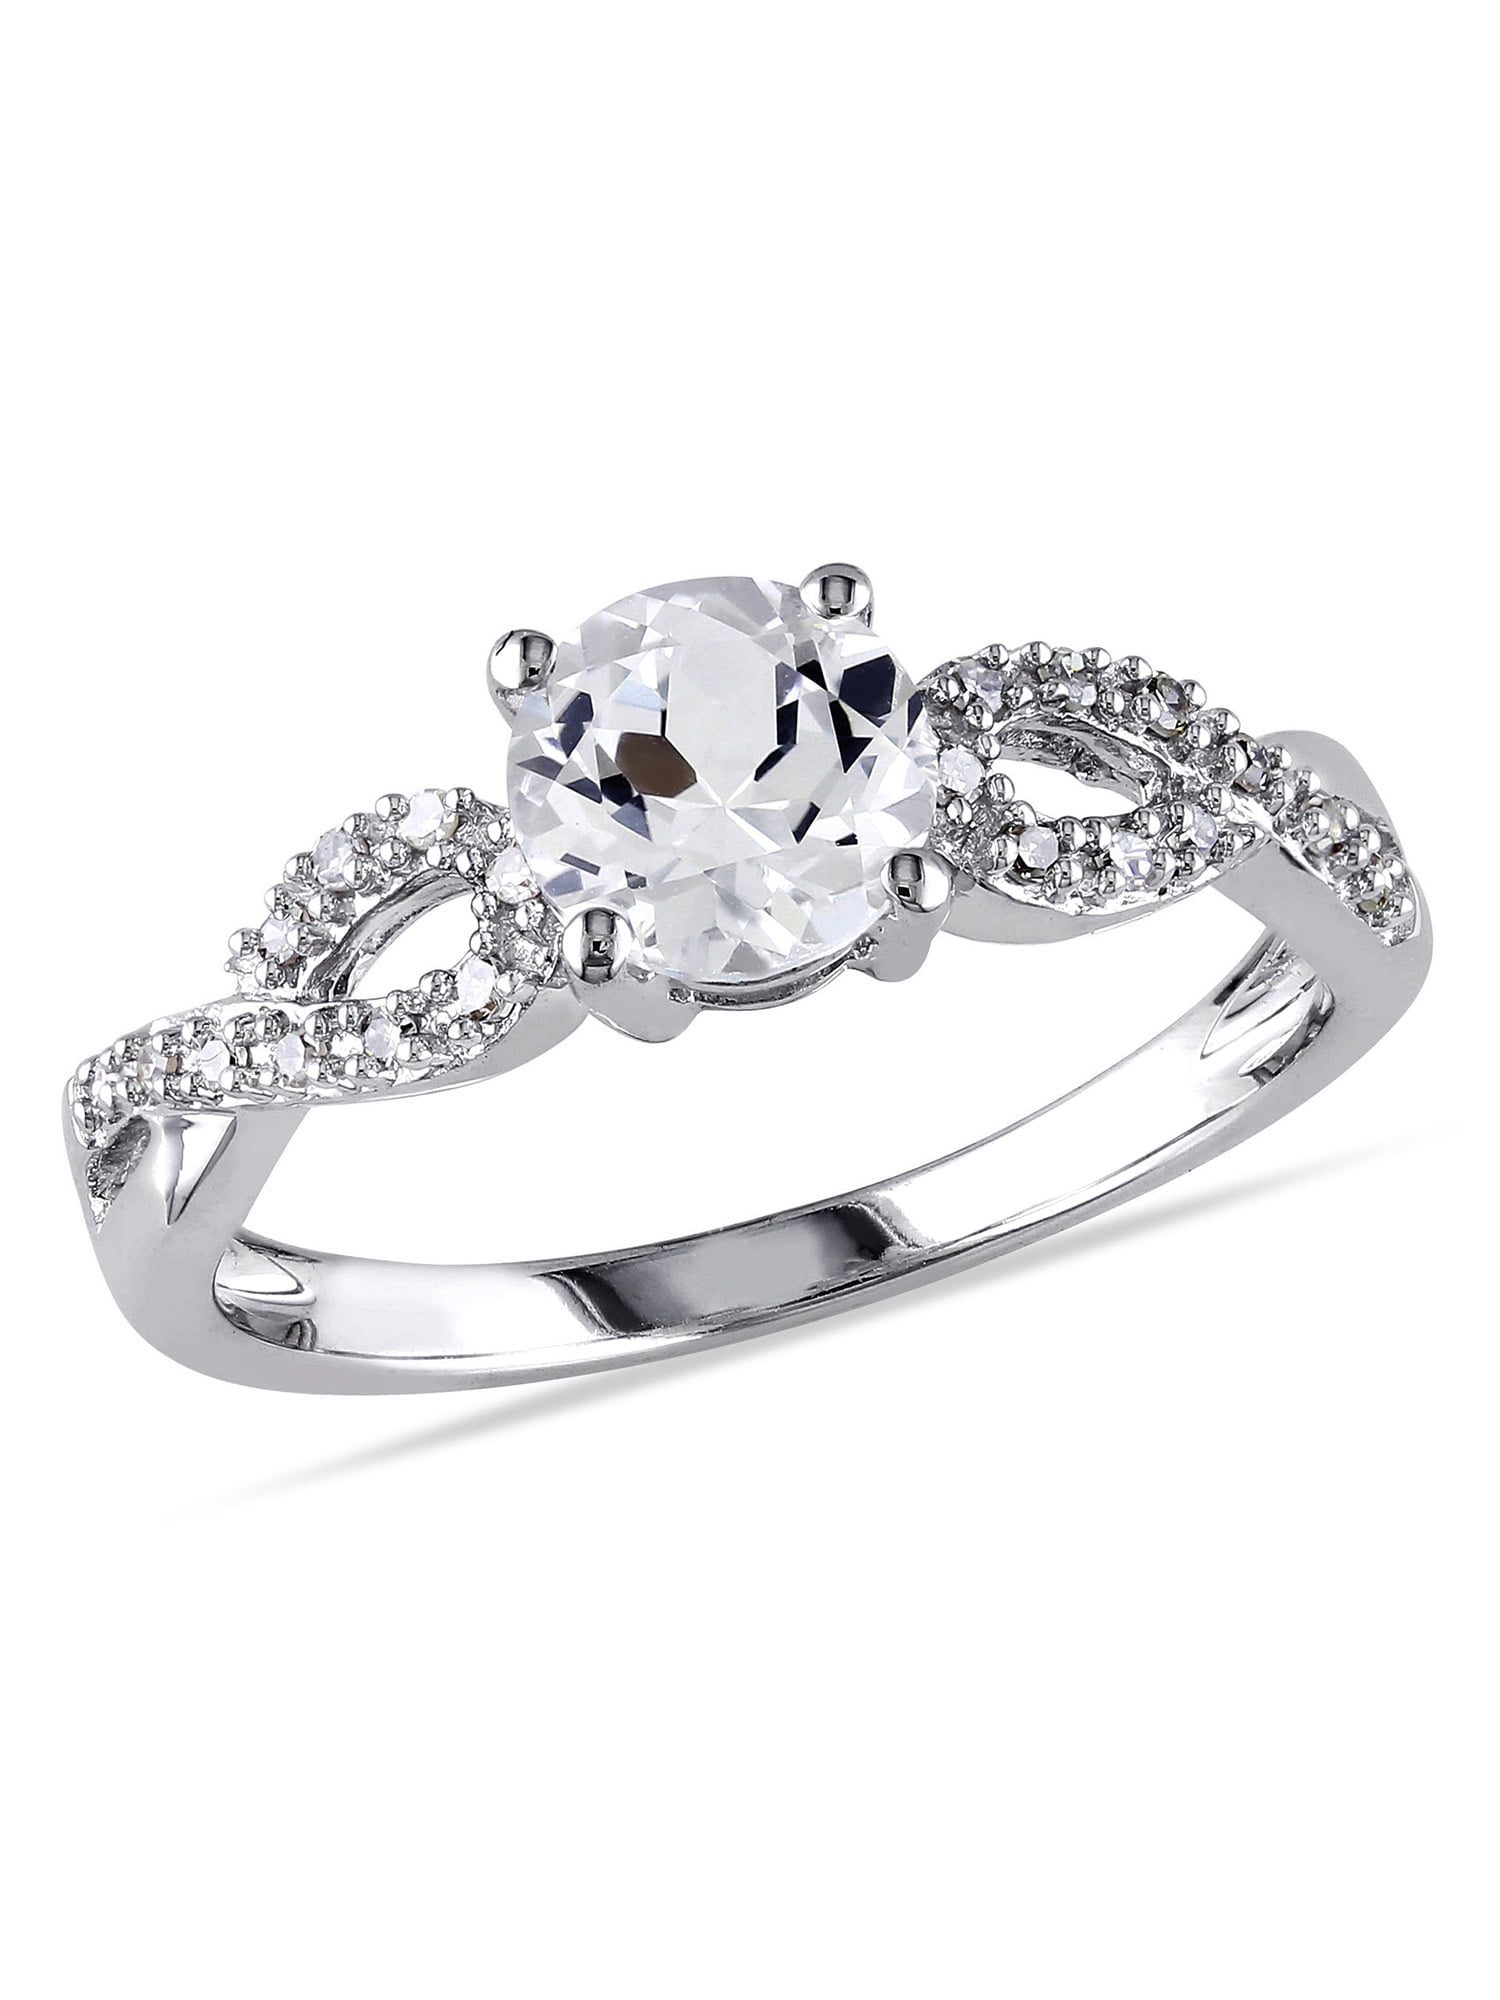 White Sapphire Wedding Ring Women's  Zircon 10KT Black Gold Filled Size 5-10